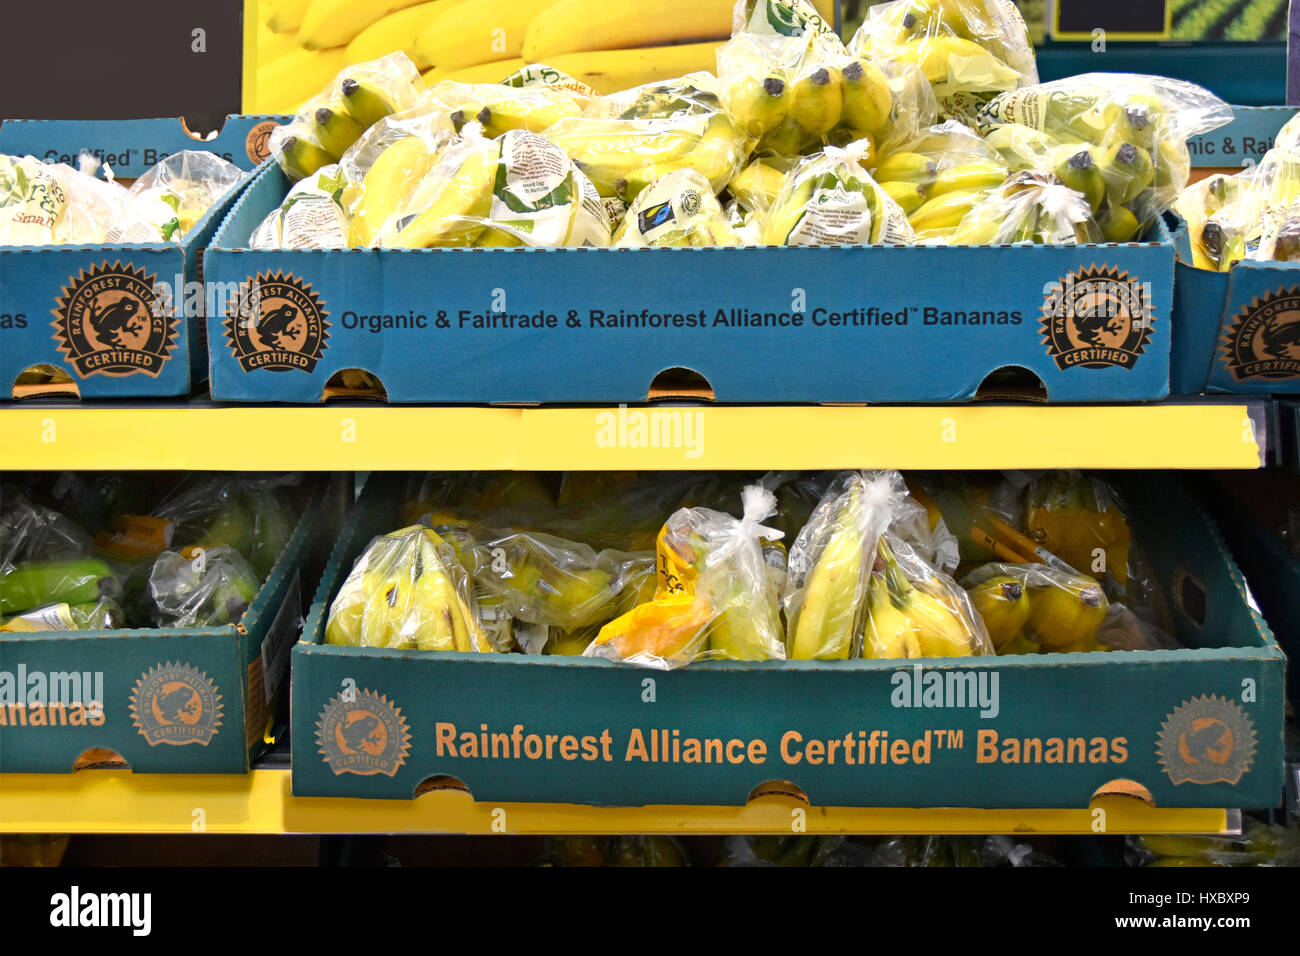 Organic & Fairtrade Rainforest Alliance Certified Bananas logo in plastic bags cardboard boxes UK Tesco supermarket fruit food shelf (prices removed) Stock Photo